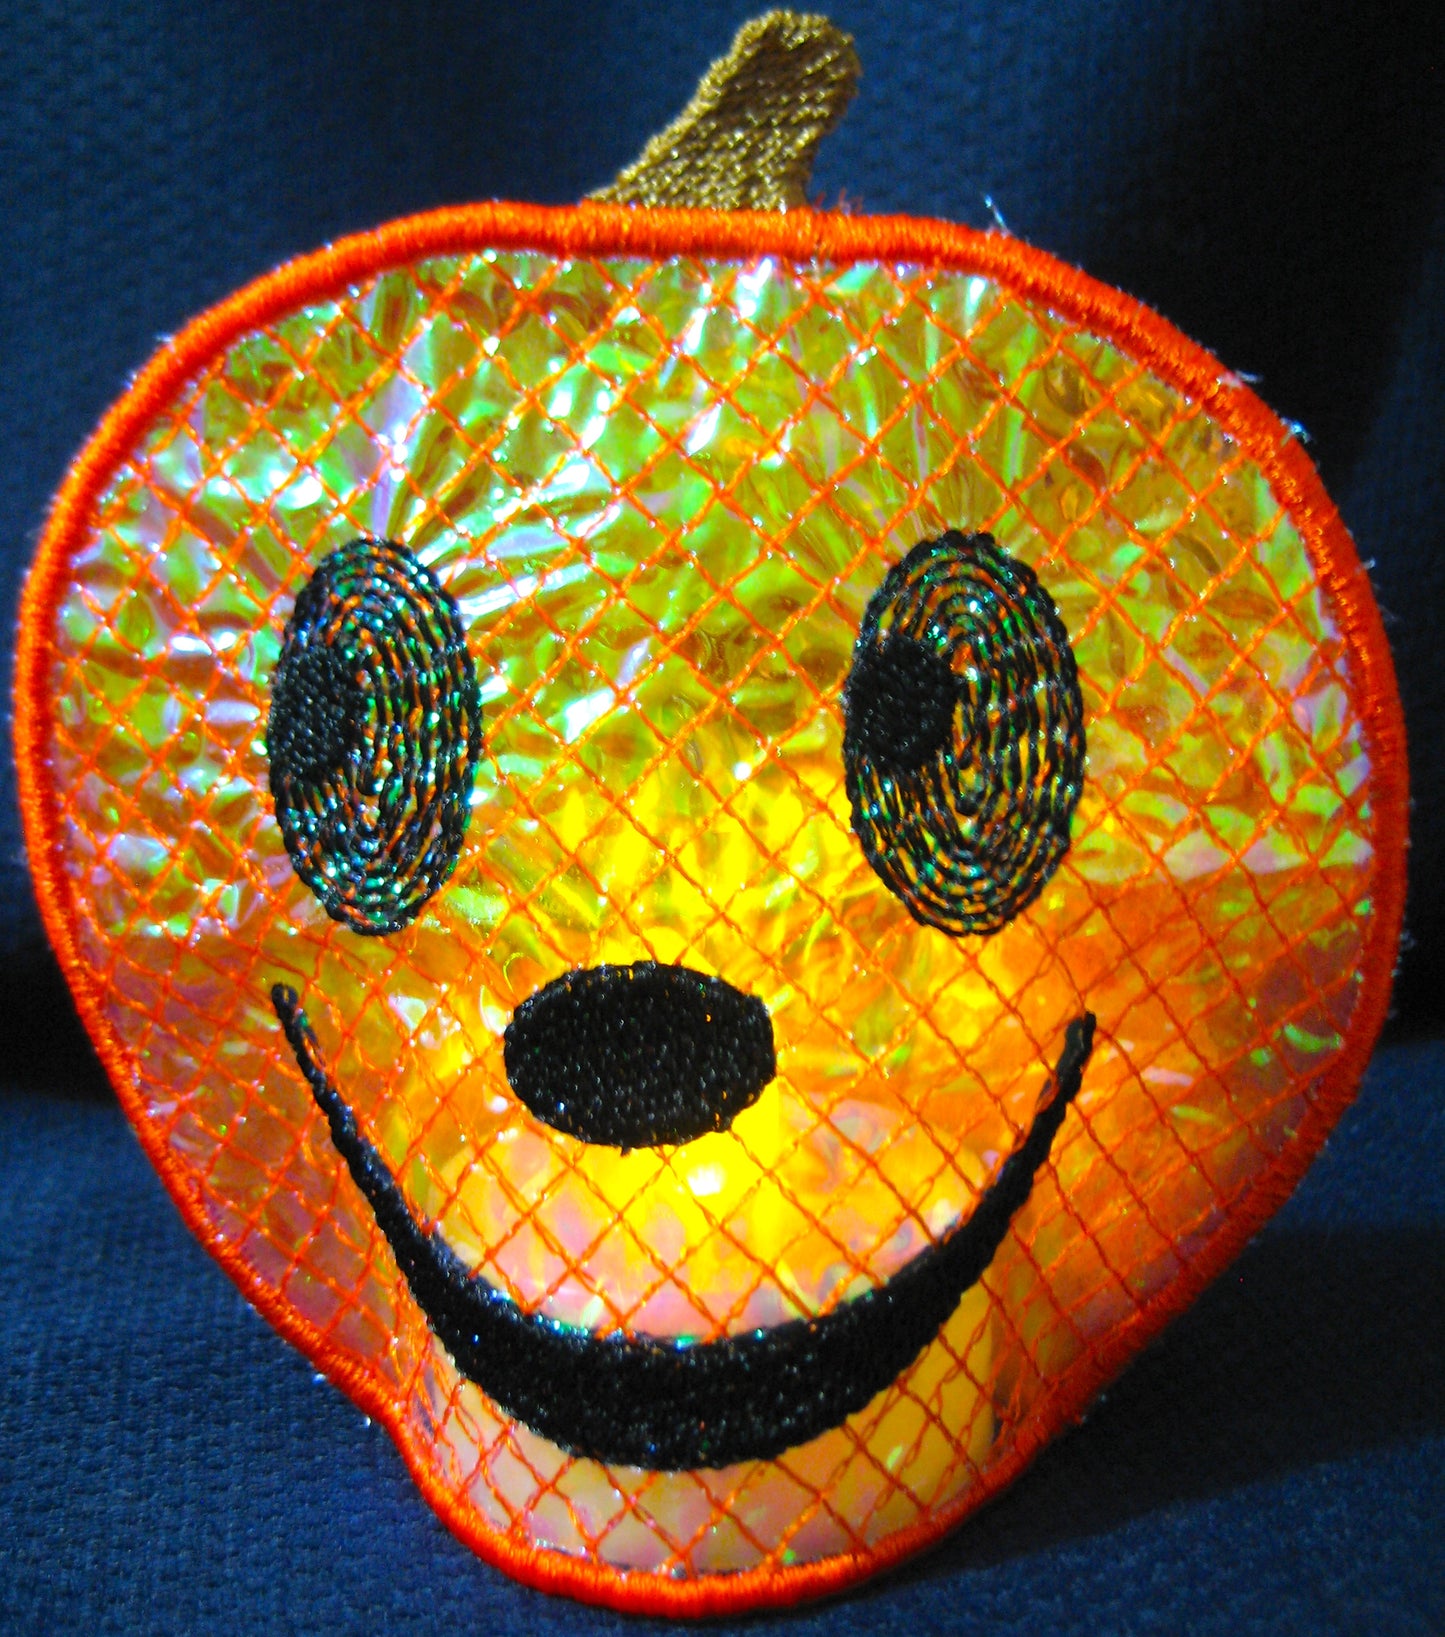 ITH Mylar Halloween Tealights [4x4] 10812 Machine Embroidery Designs